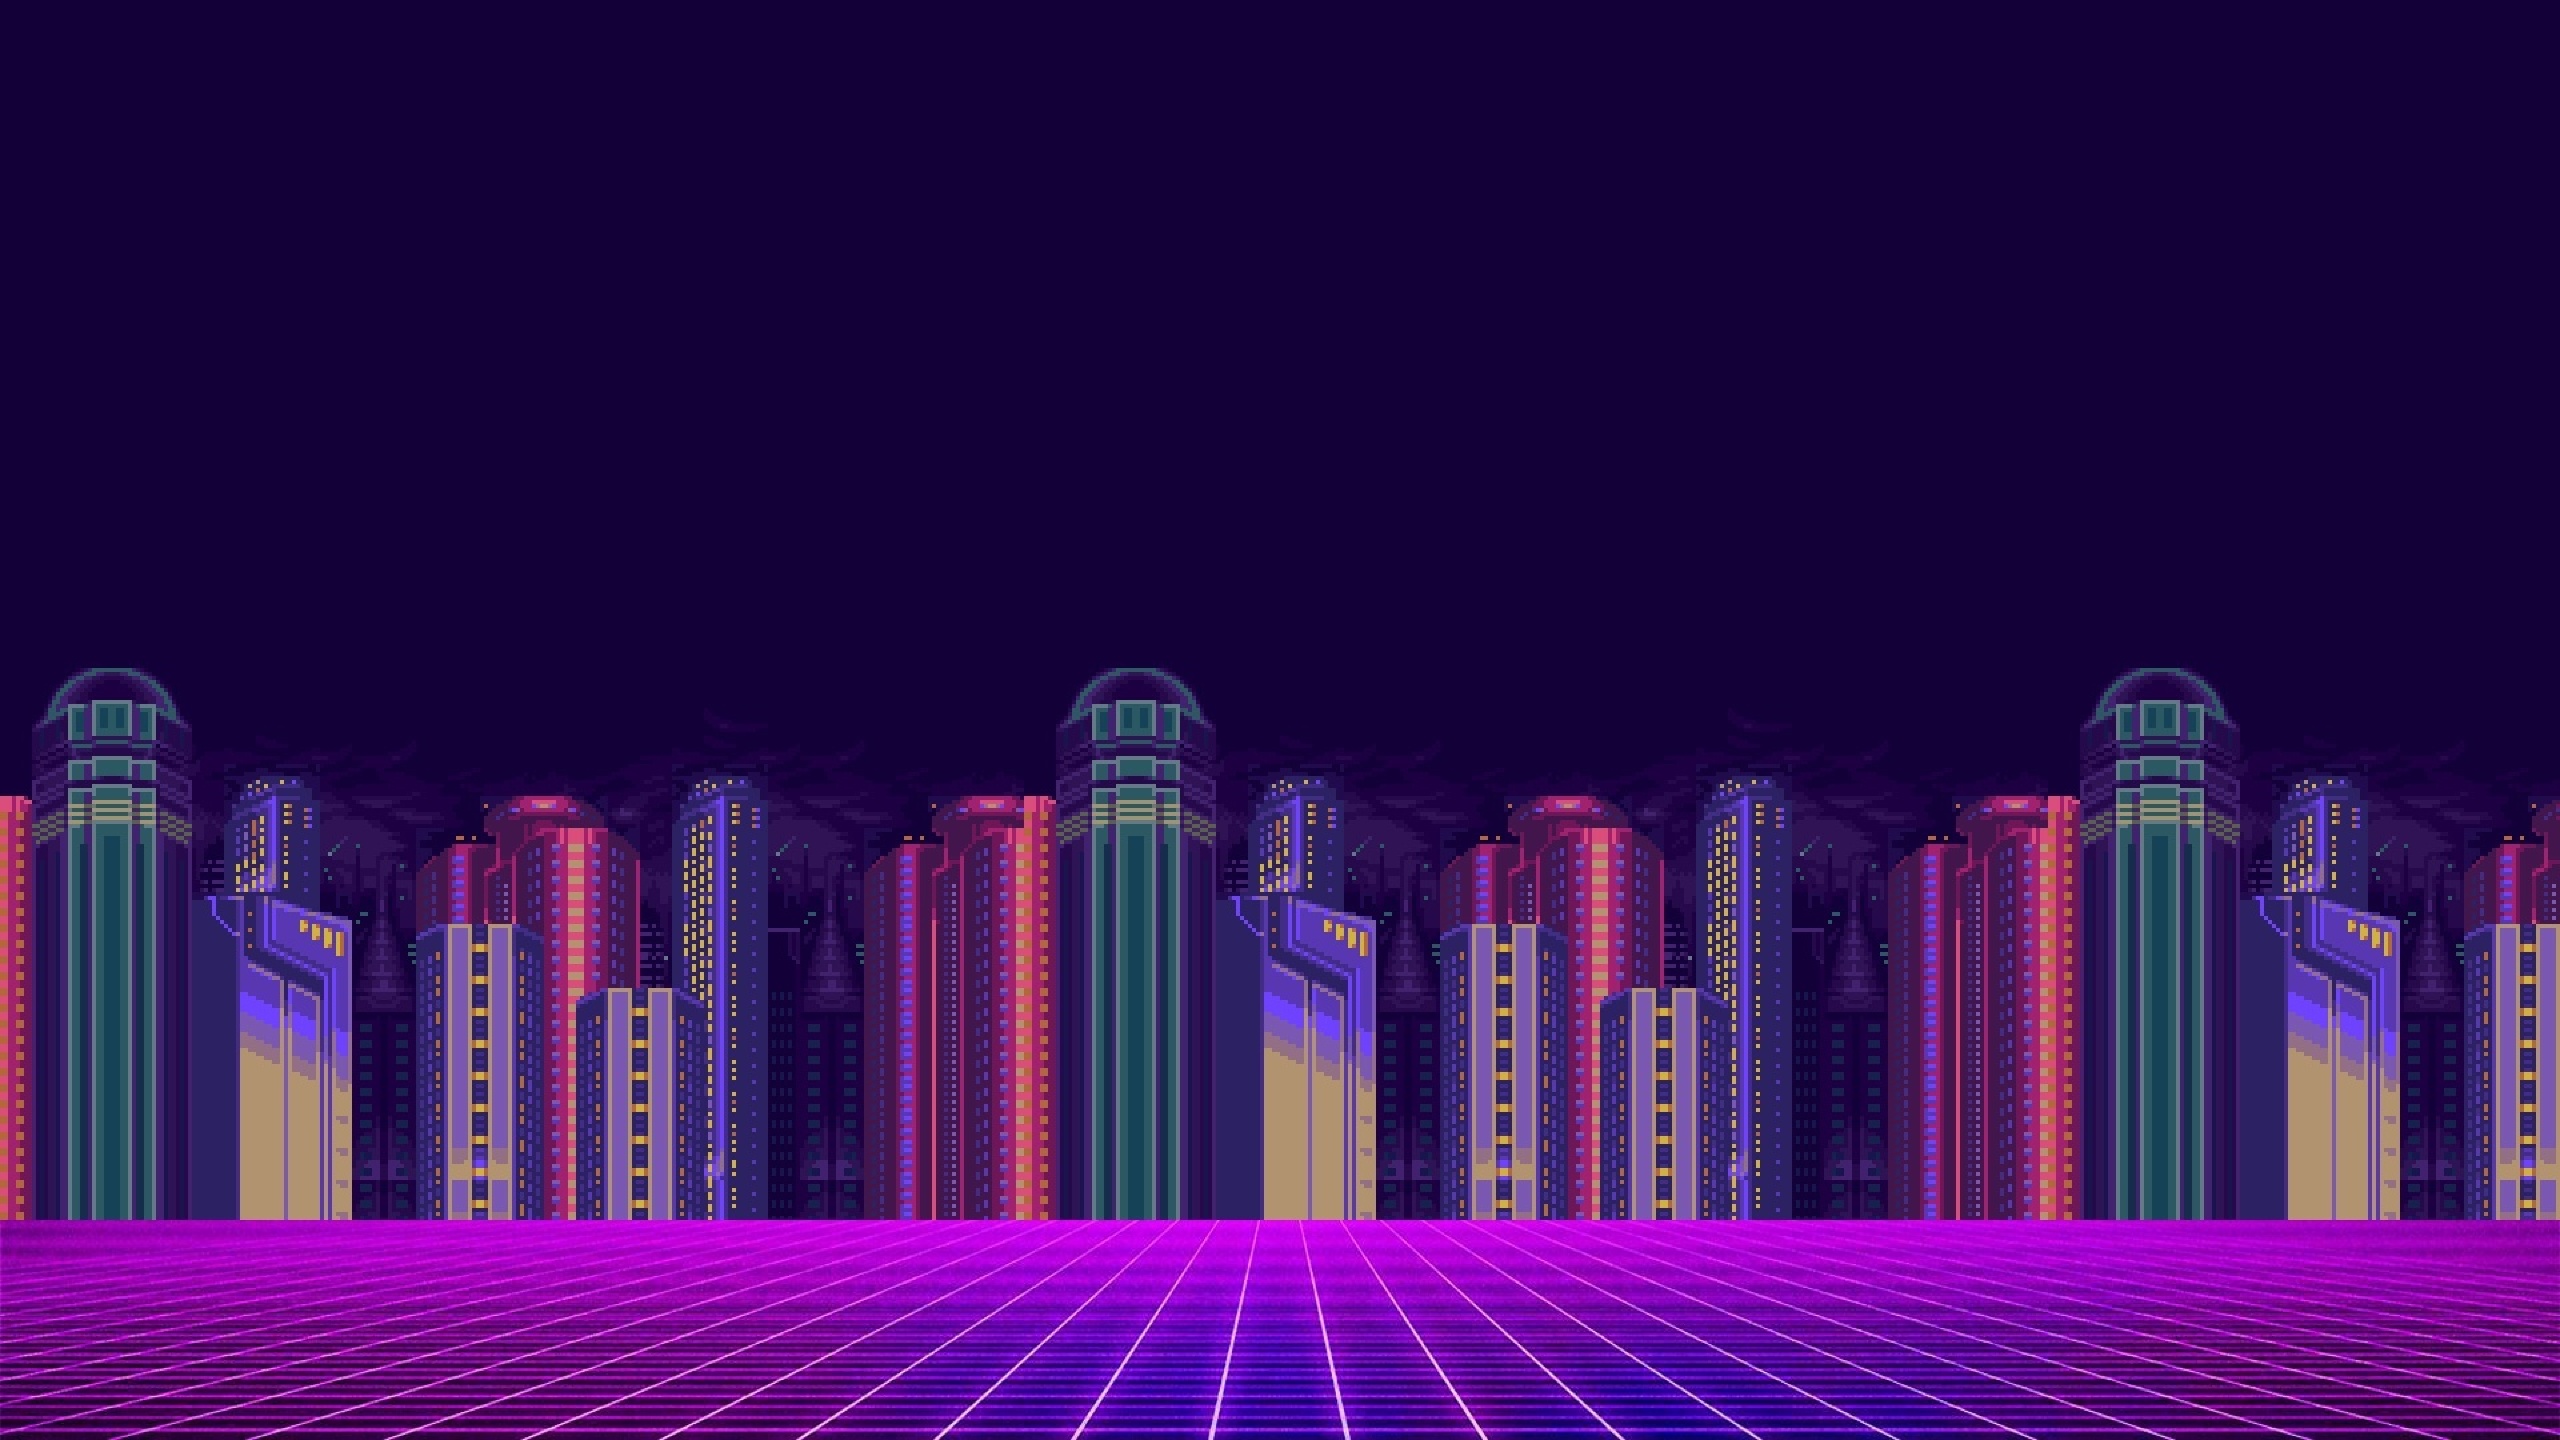 Neon City 8 Bit - HD Wallpaper 